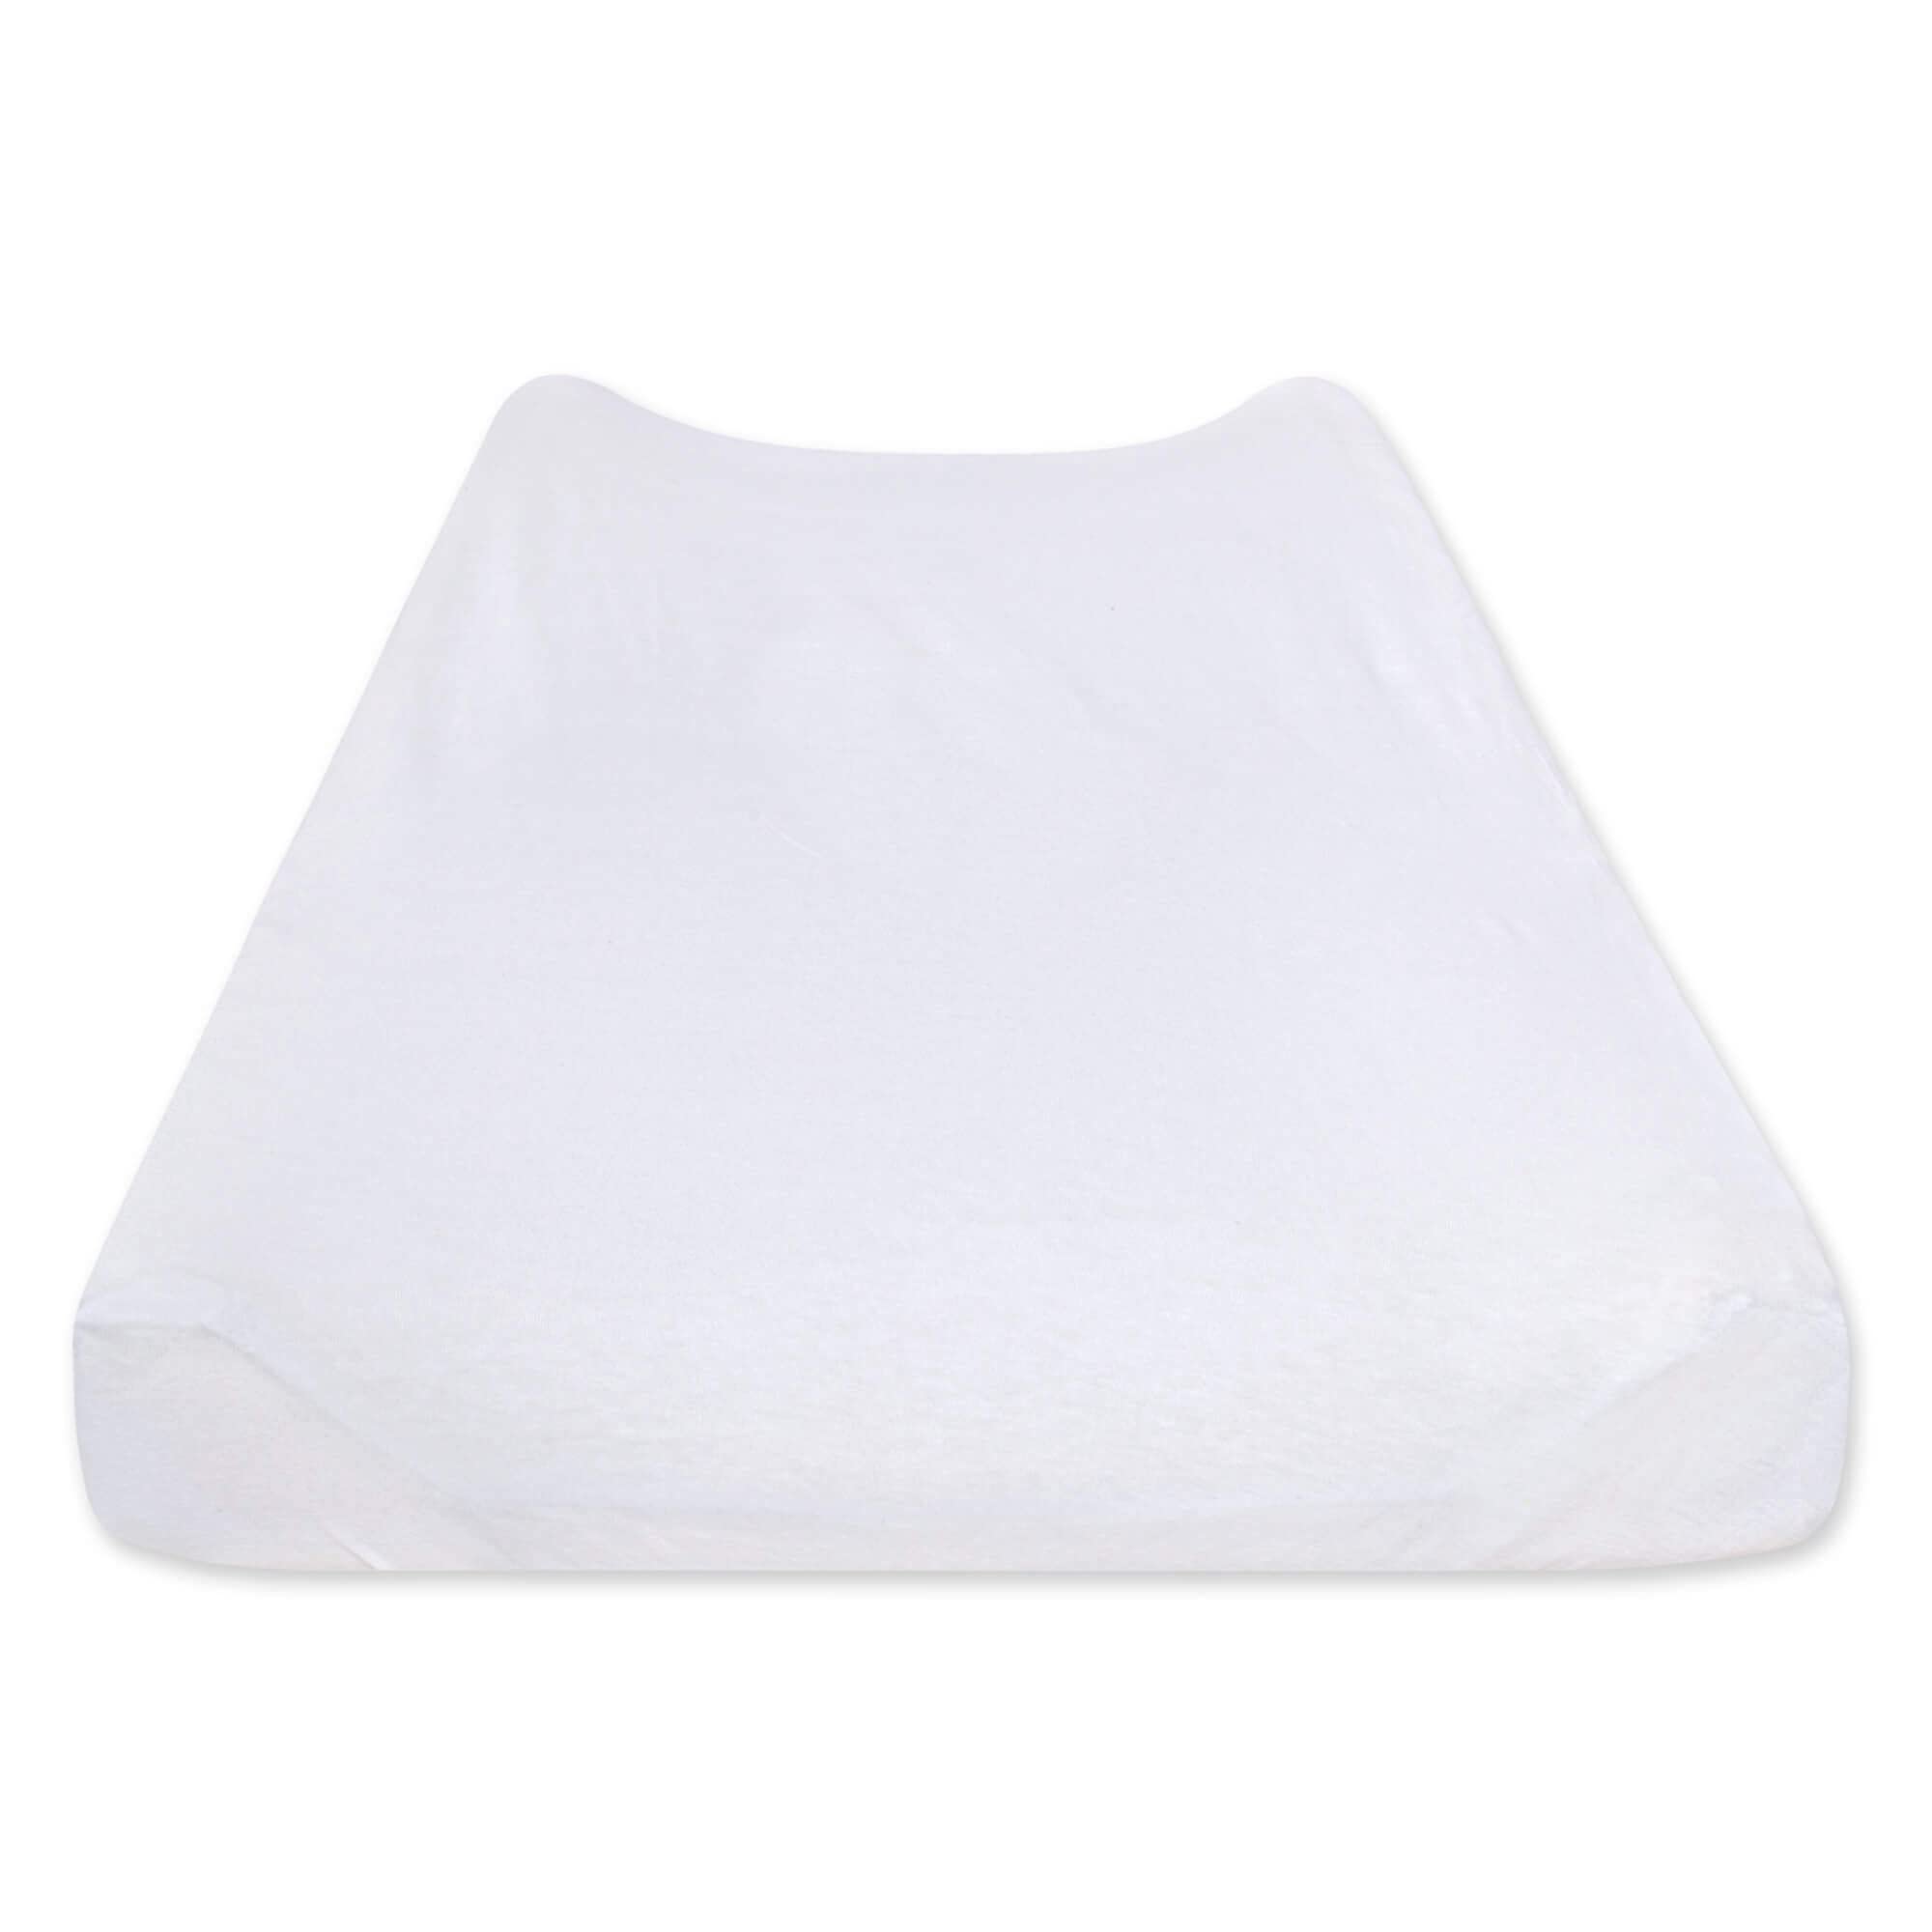 Burt's Bees Baby Unisex Baby Gift Set - Crib Sheet, Changing Pad Cover & Burp Cloths, 100% Organic Cotton Essentials Bundle